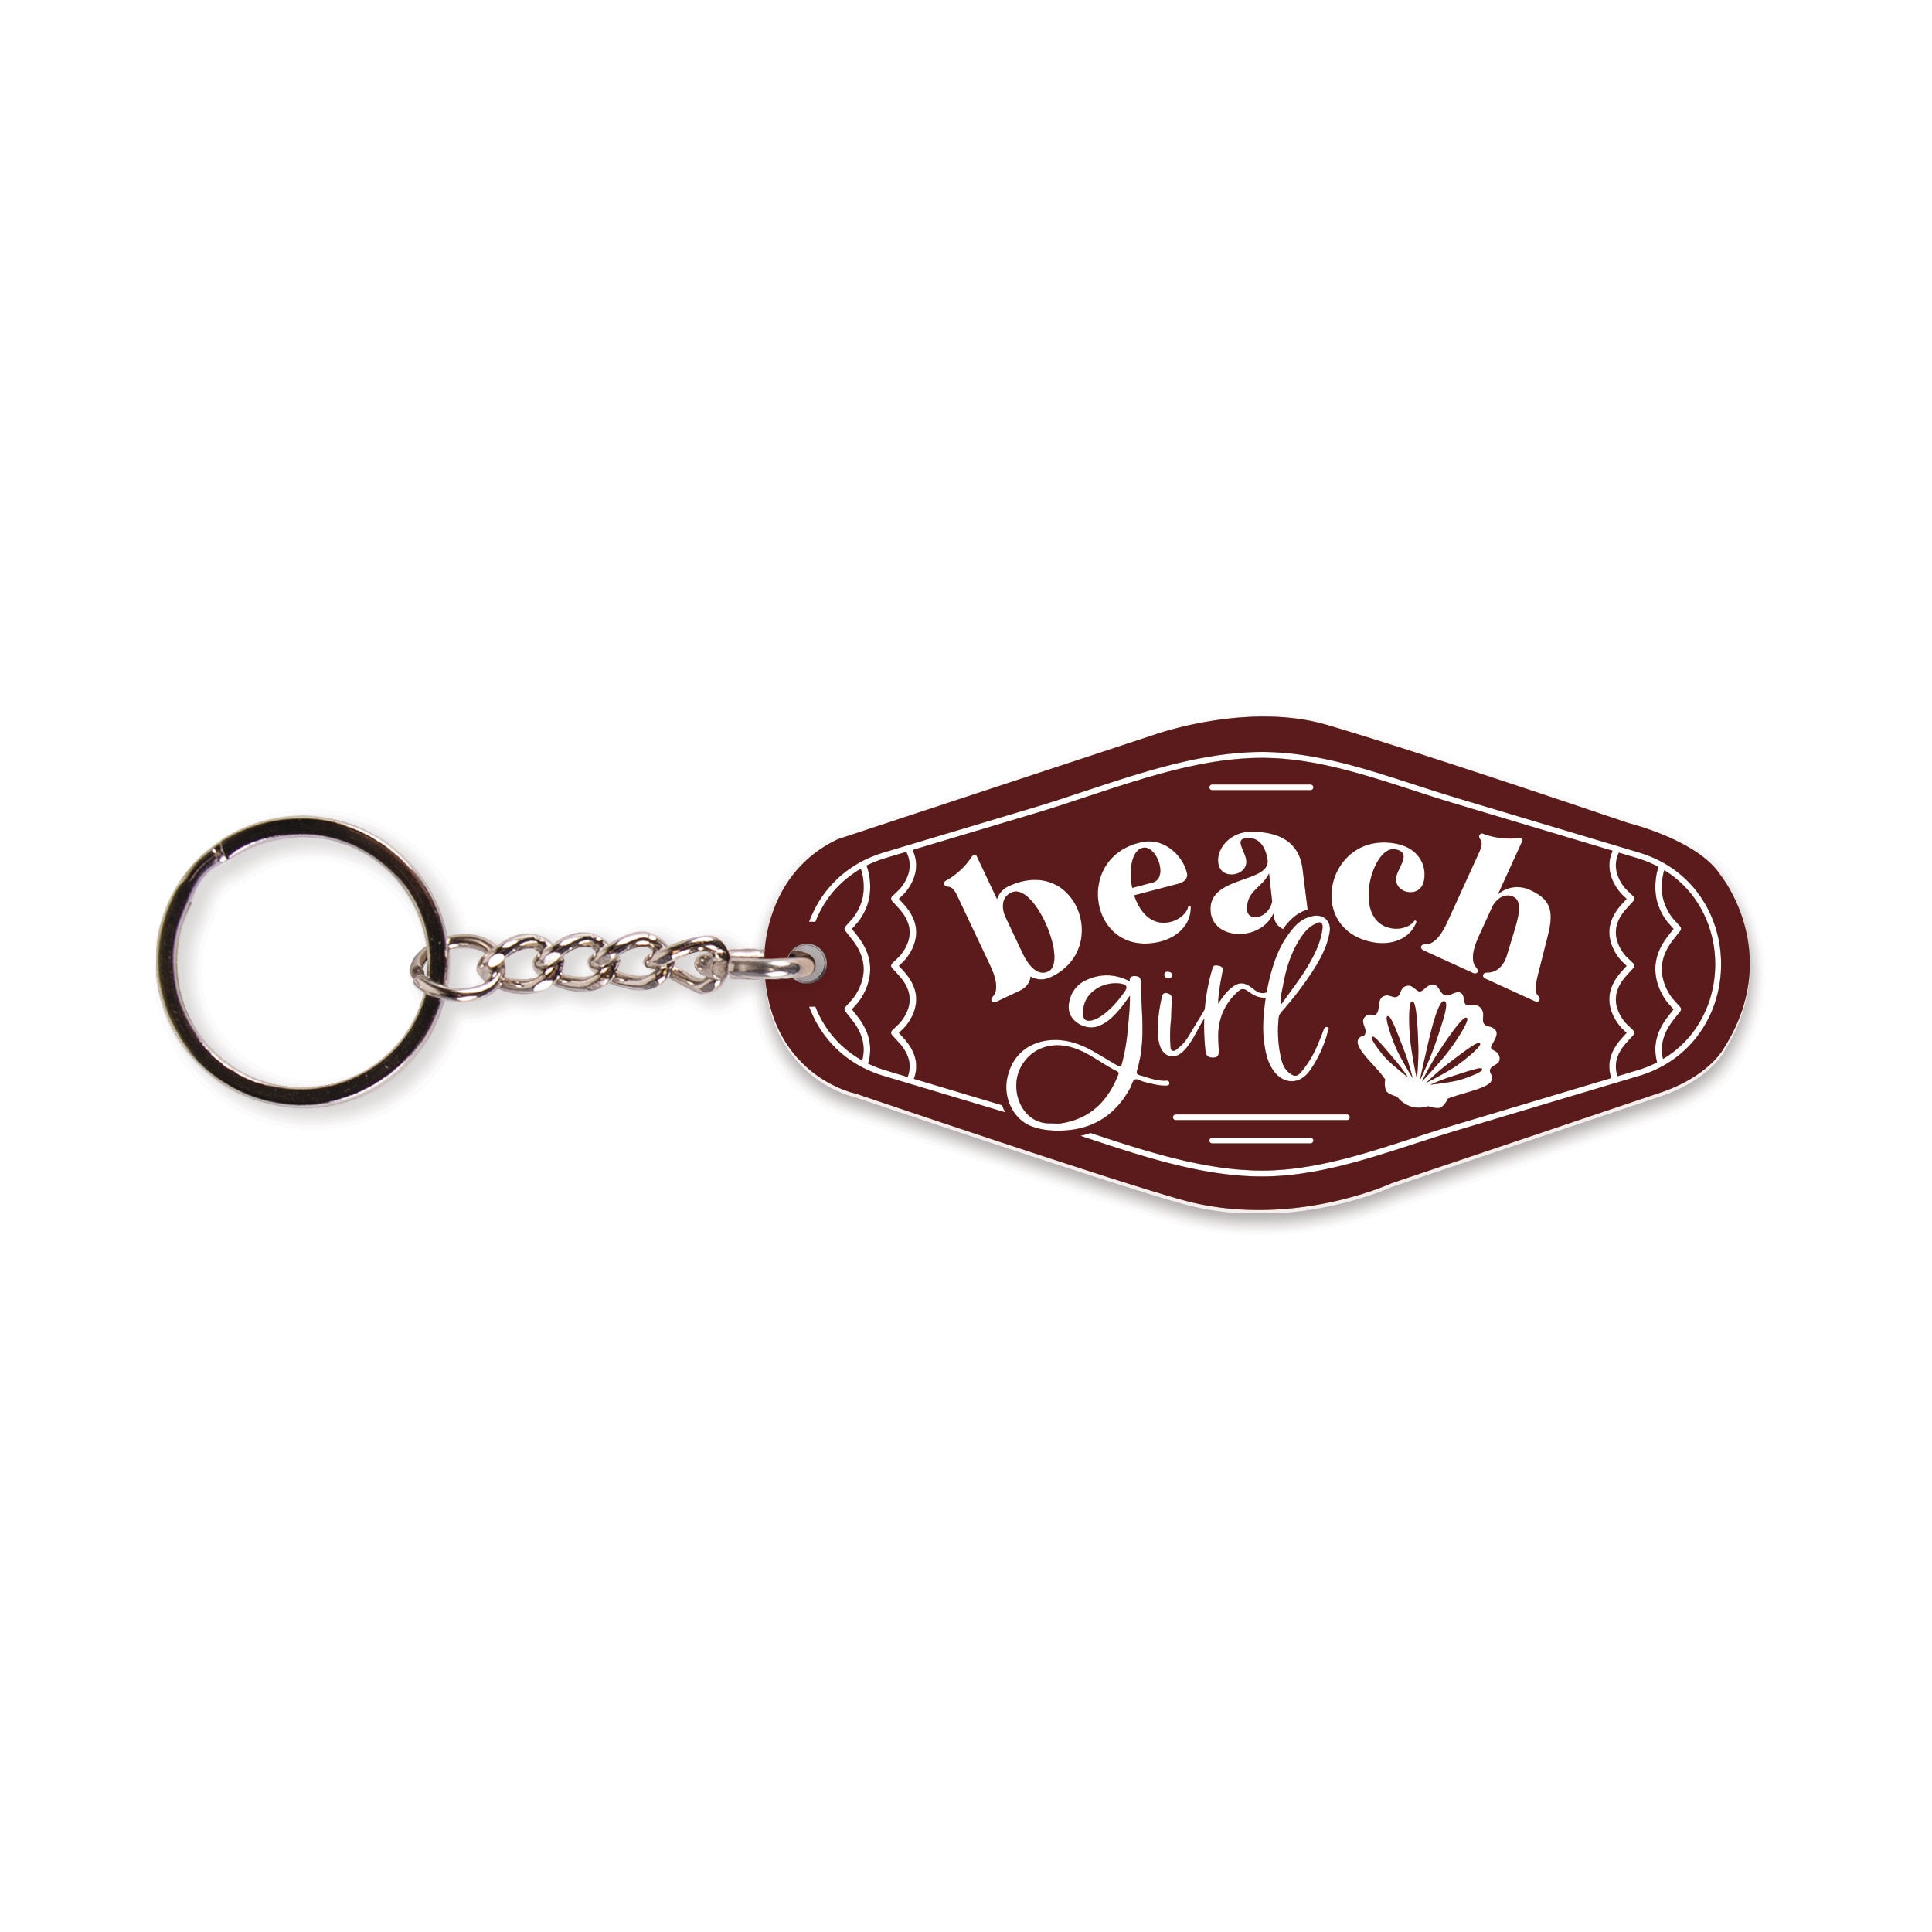 Beach Girl Vintage Engraved Key Chain